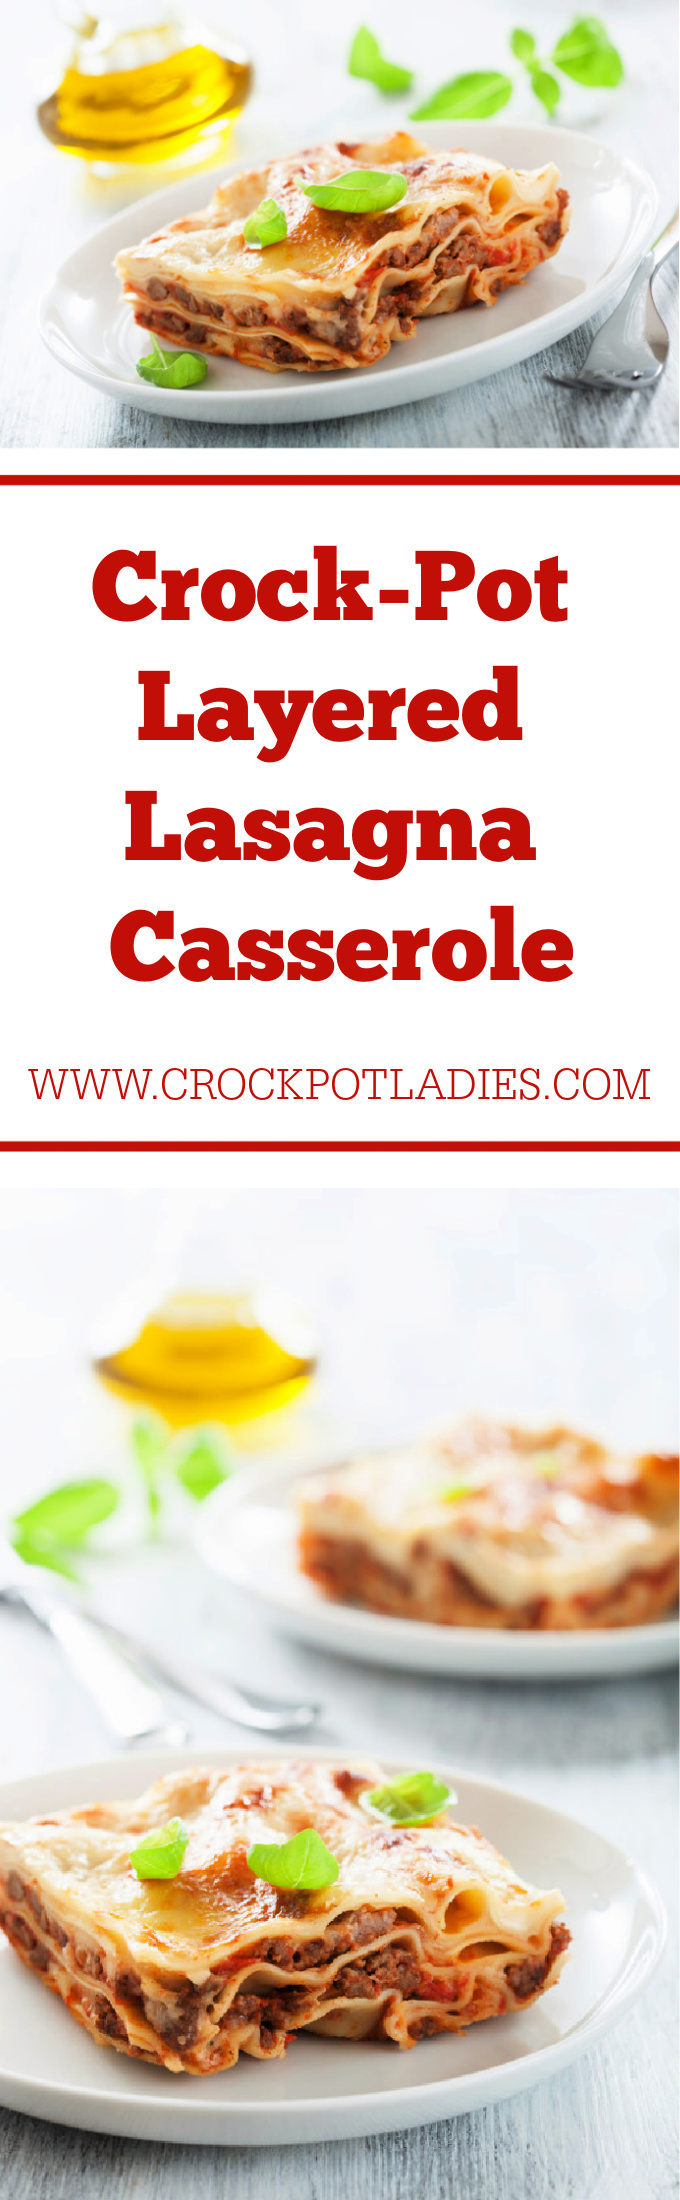 Crock-Pot Layered Lasagna Casserole